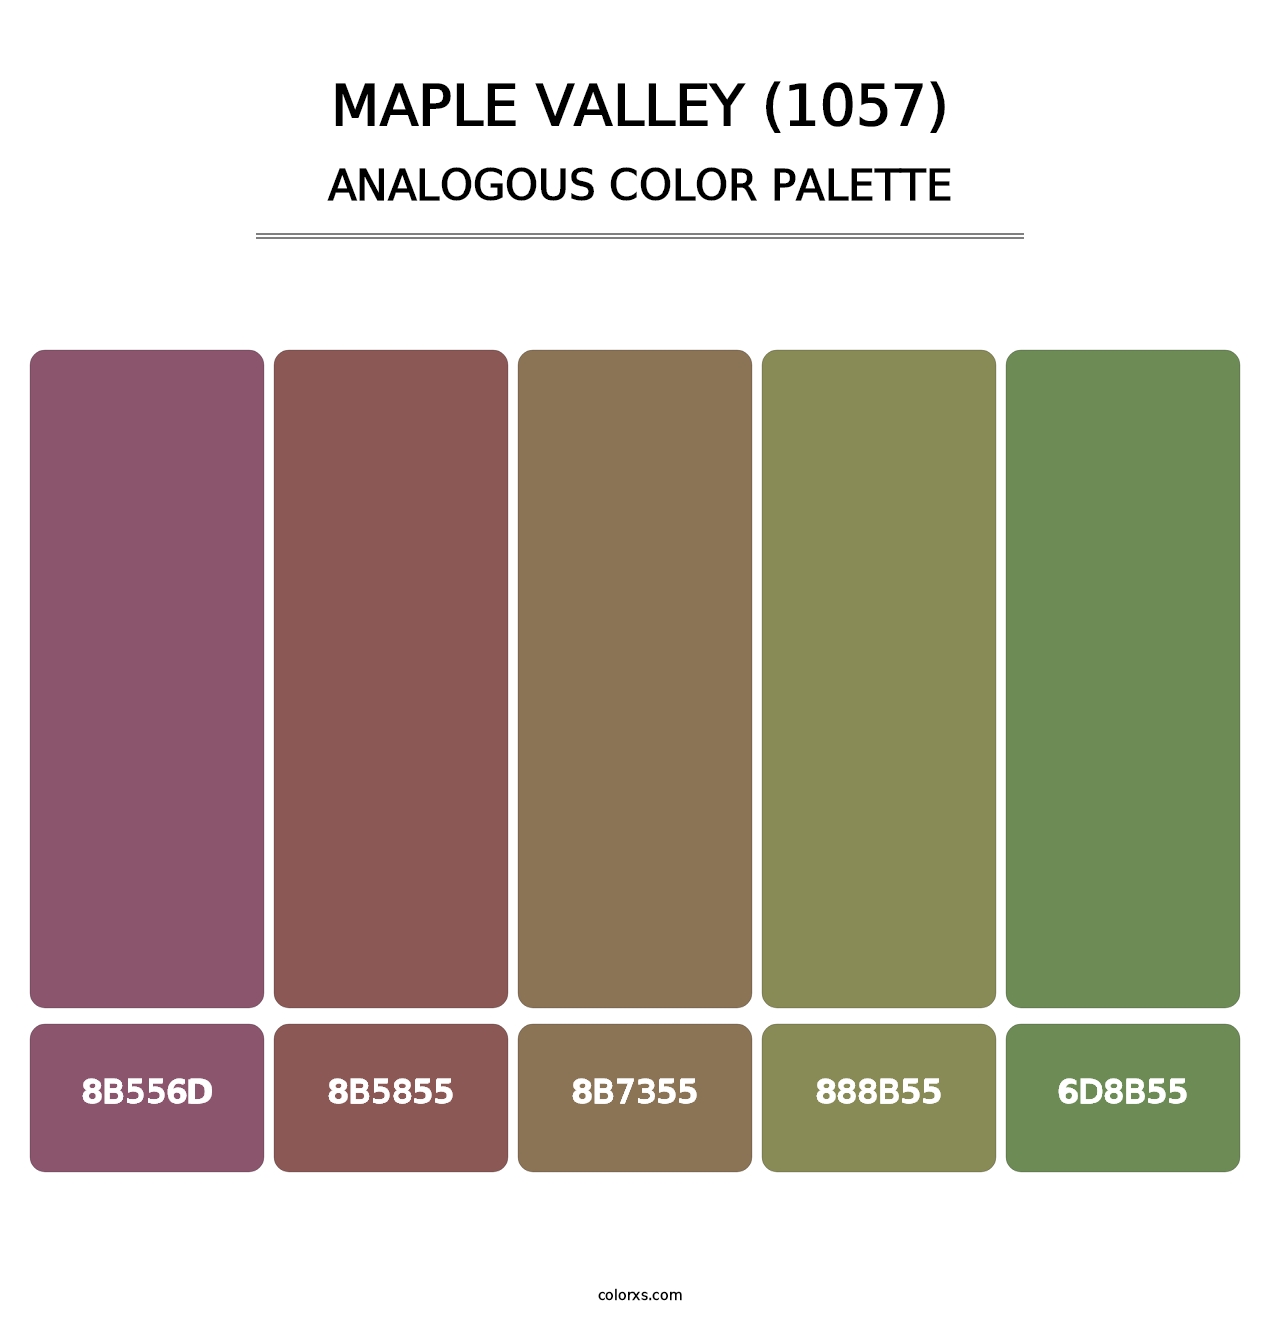 Maple Valley (1057) - Analogous Color Palette